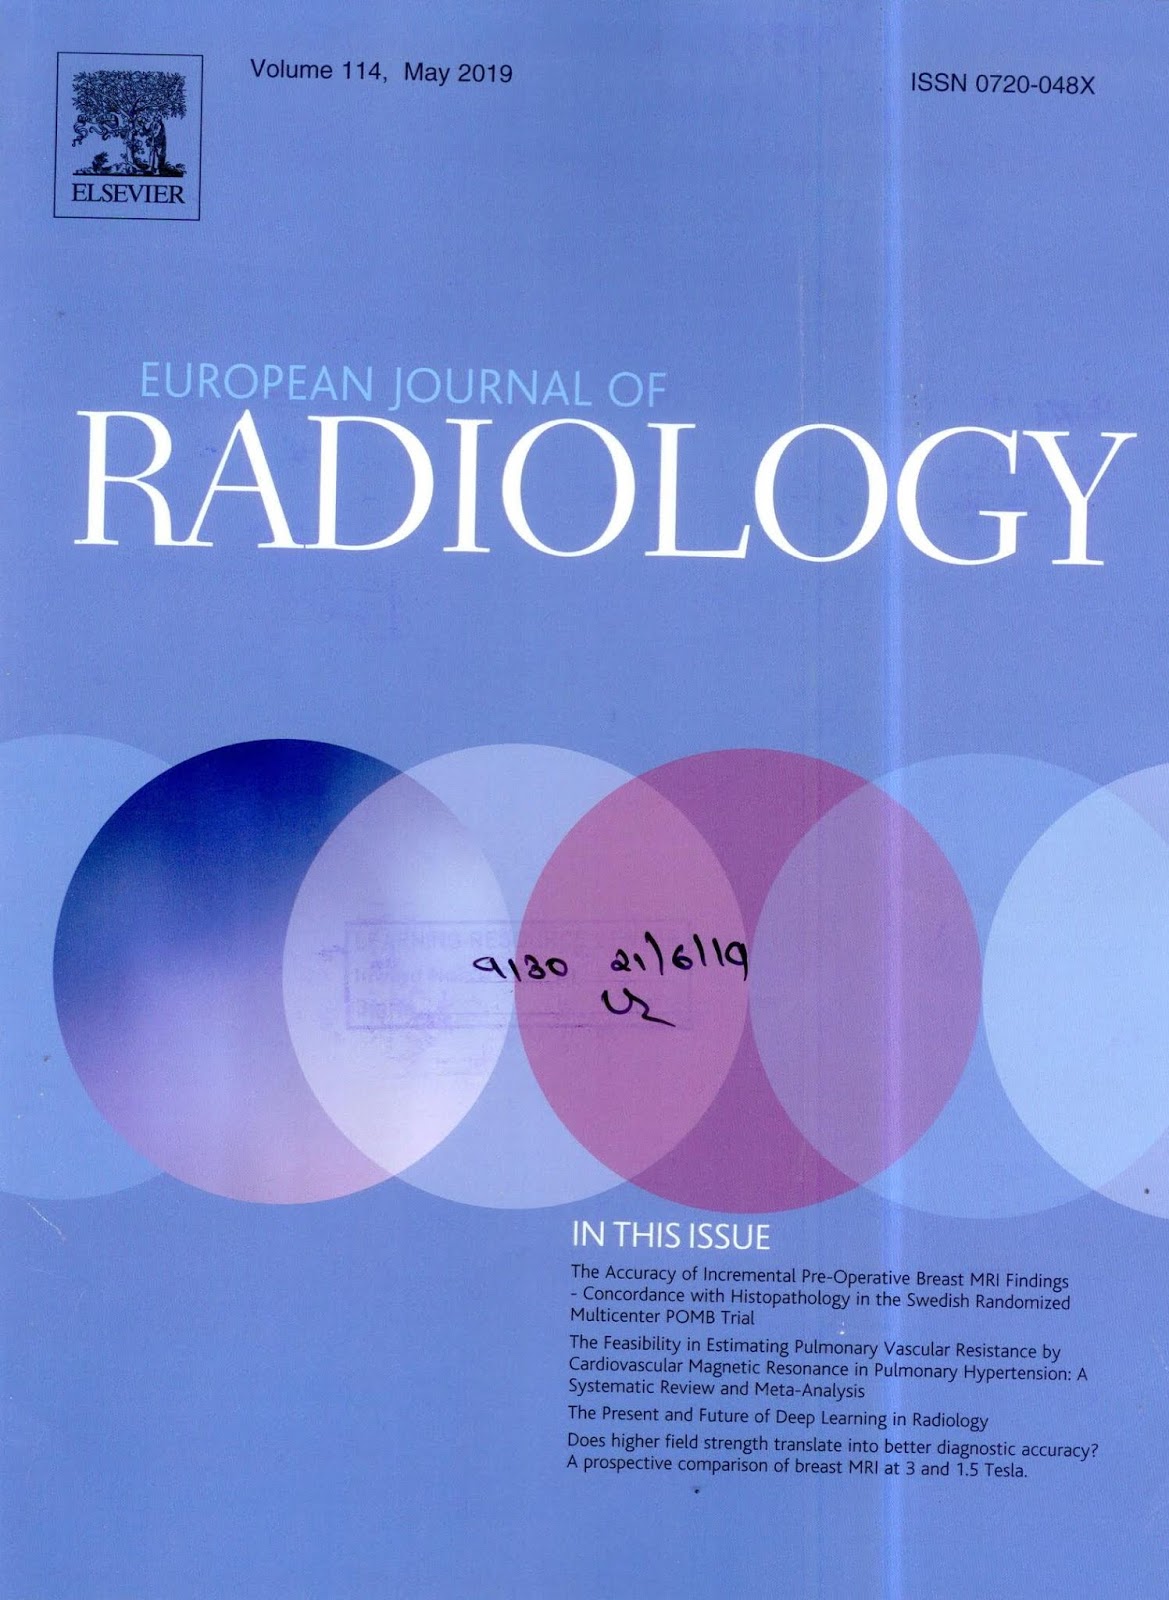 https://www.ejradiology.com/issue/S0720-048X(19)X0004-2